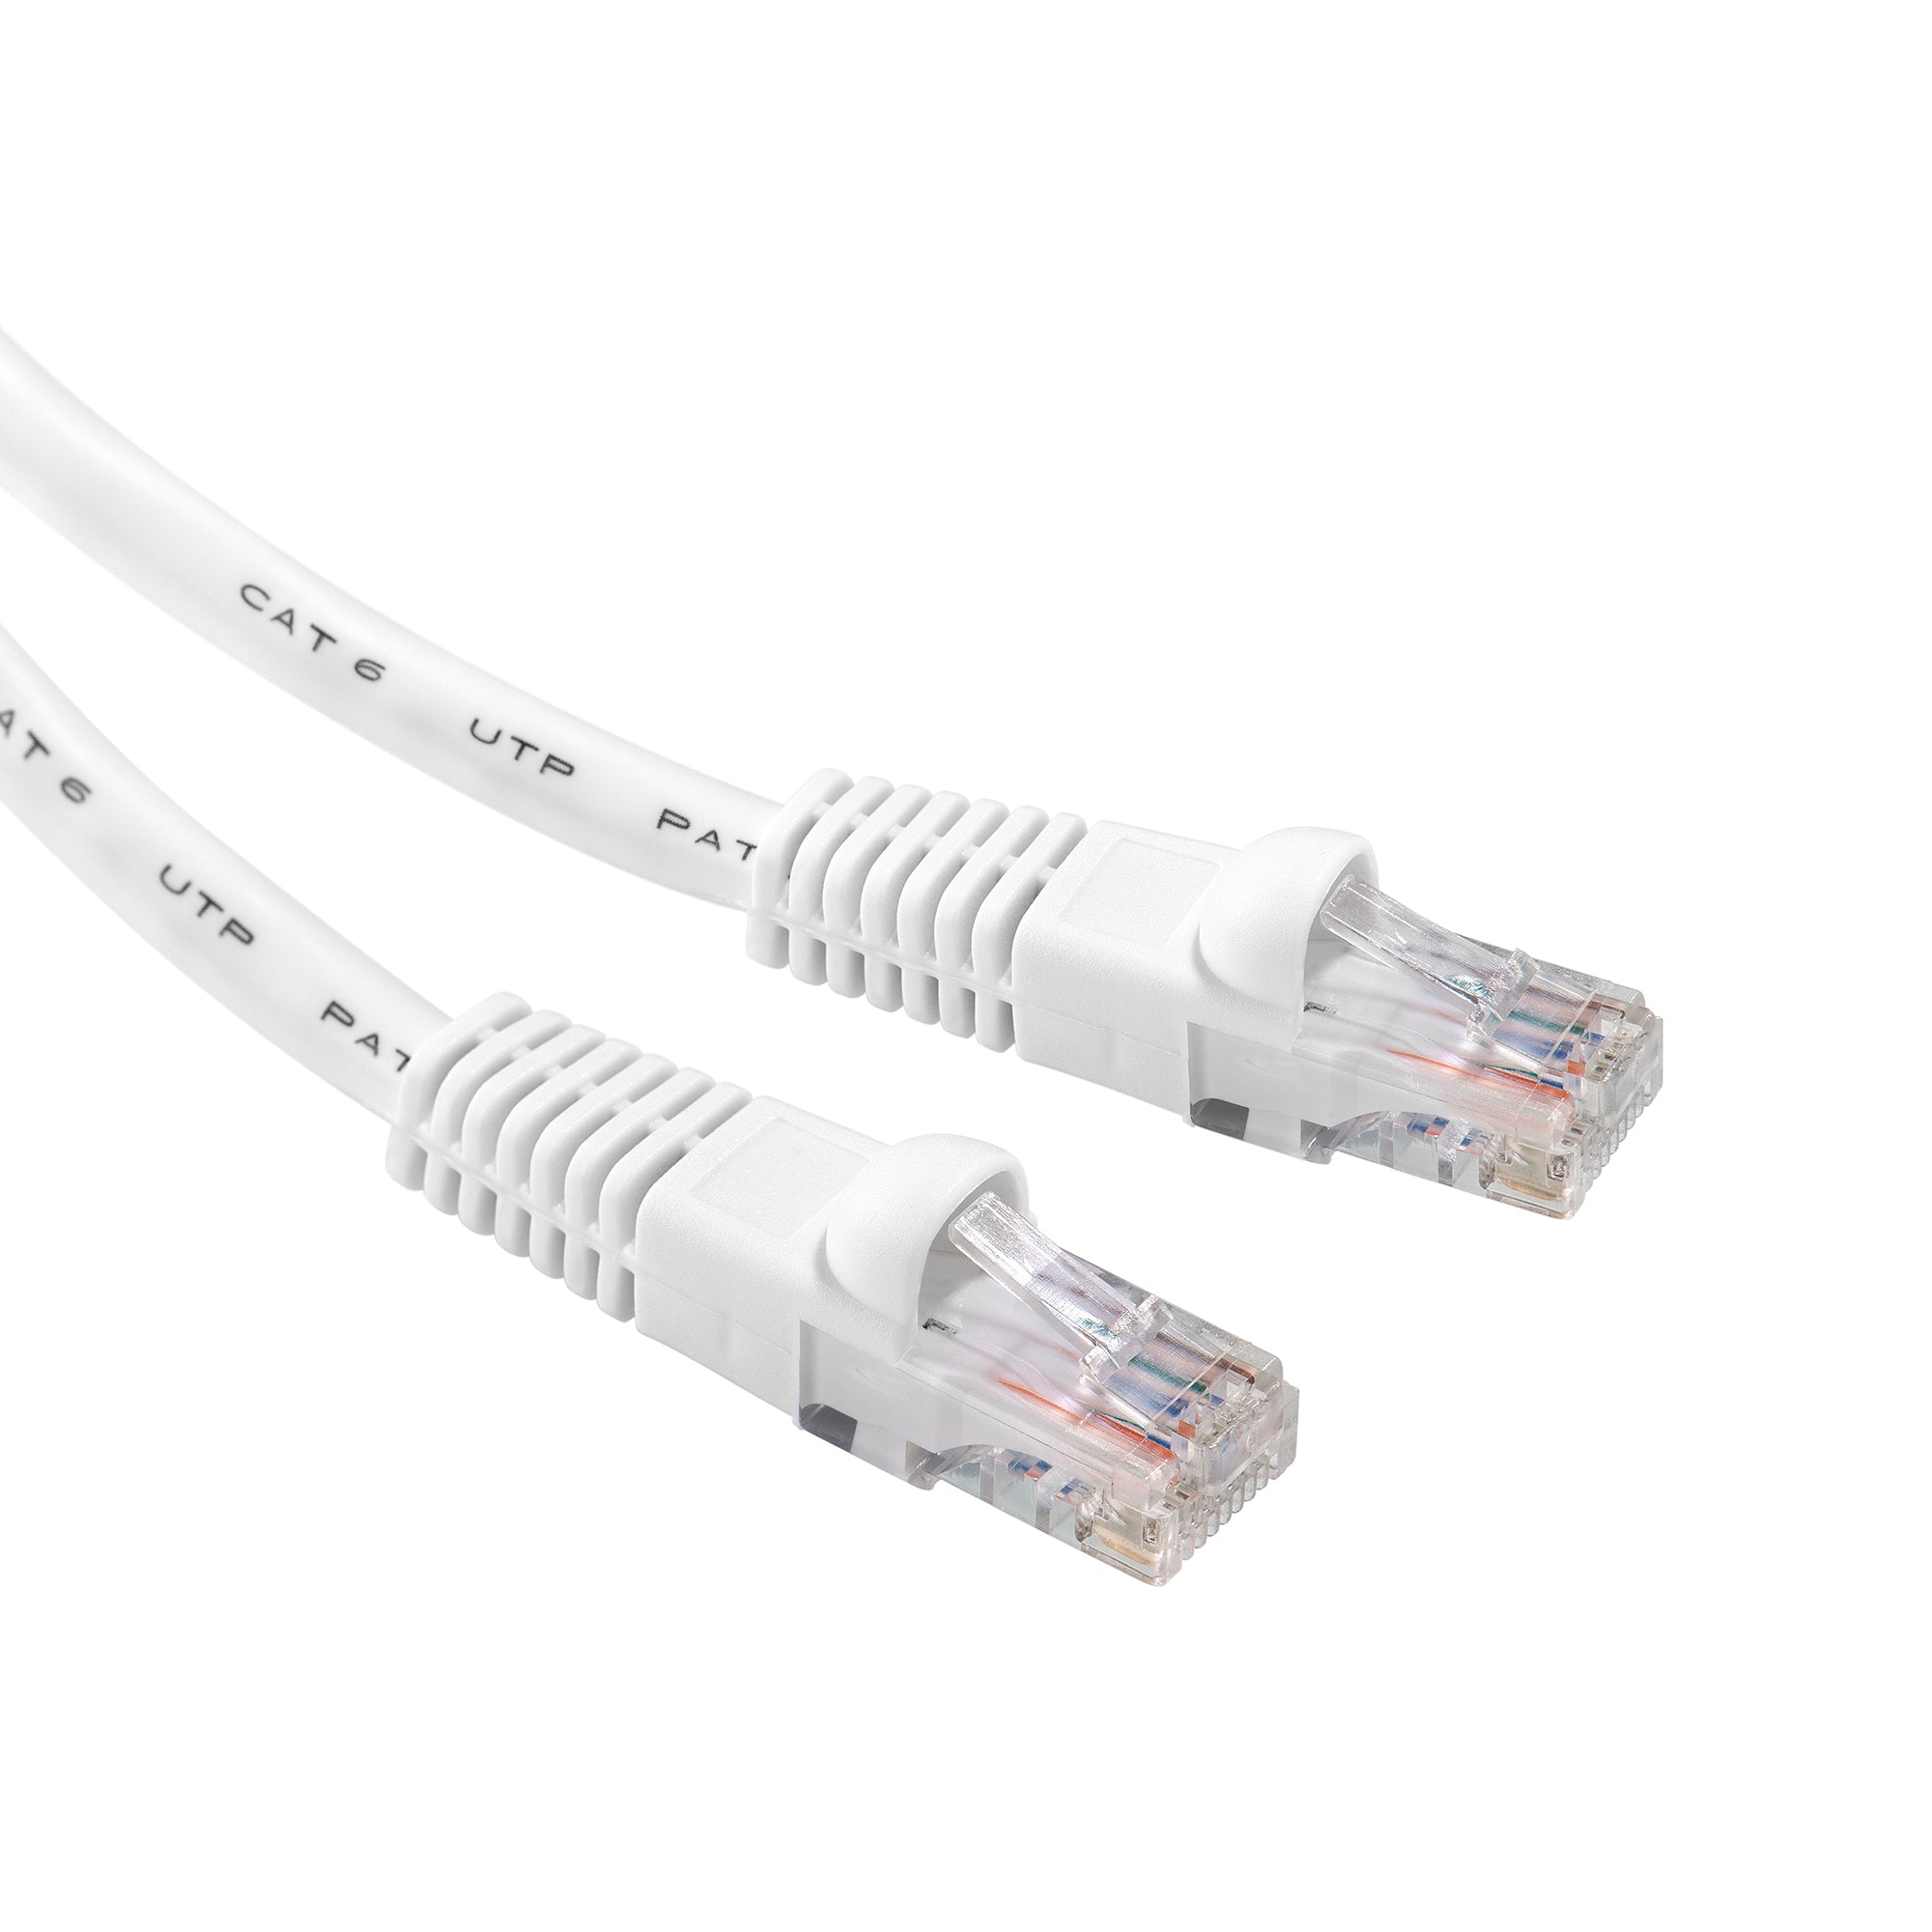 3m CAT6 RJ45 Ethernet Network Cable